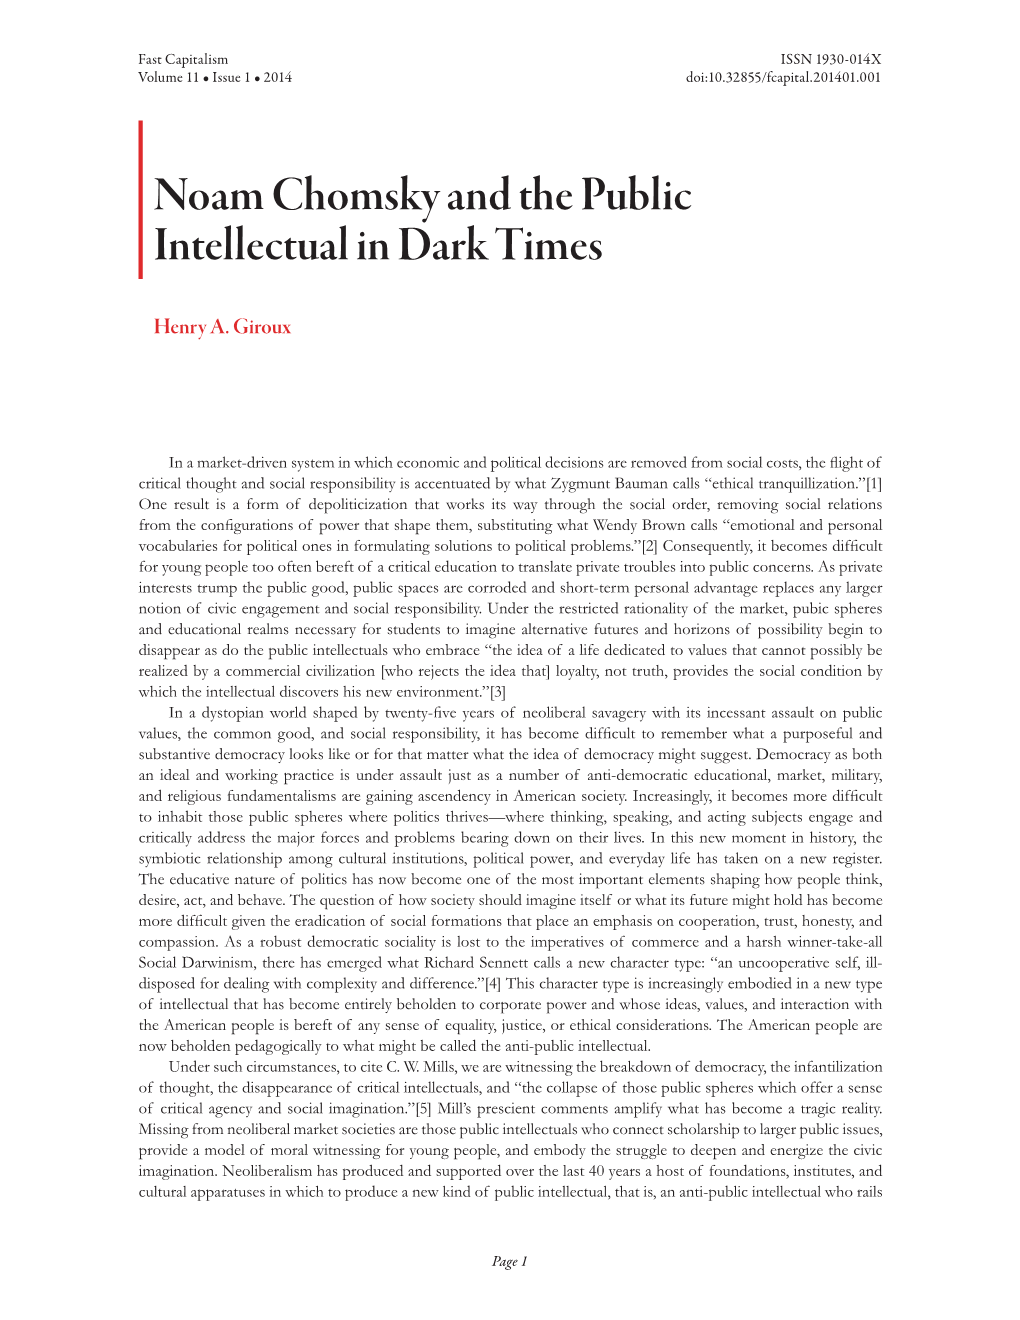 Noam Chomsky and the Public Intellectual in Dark Times